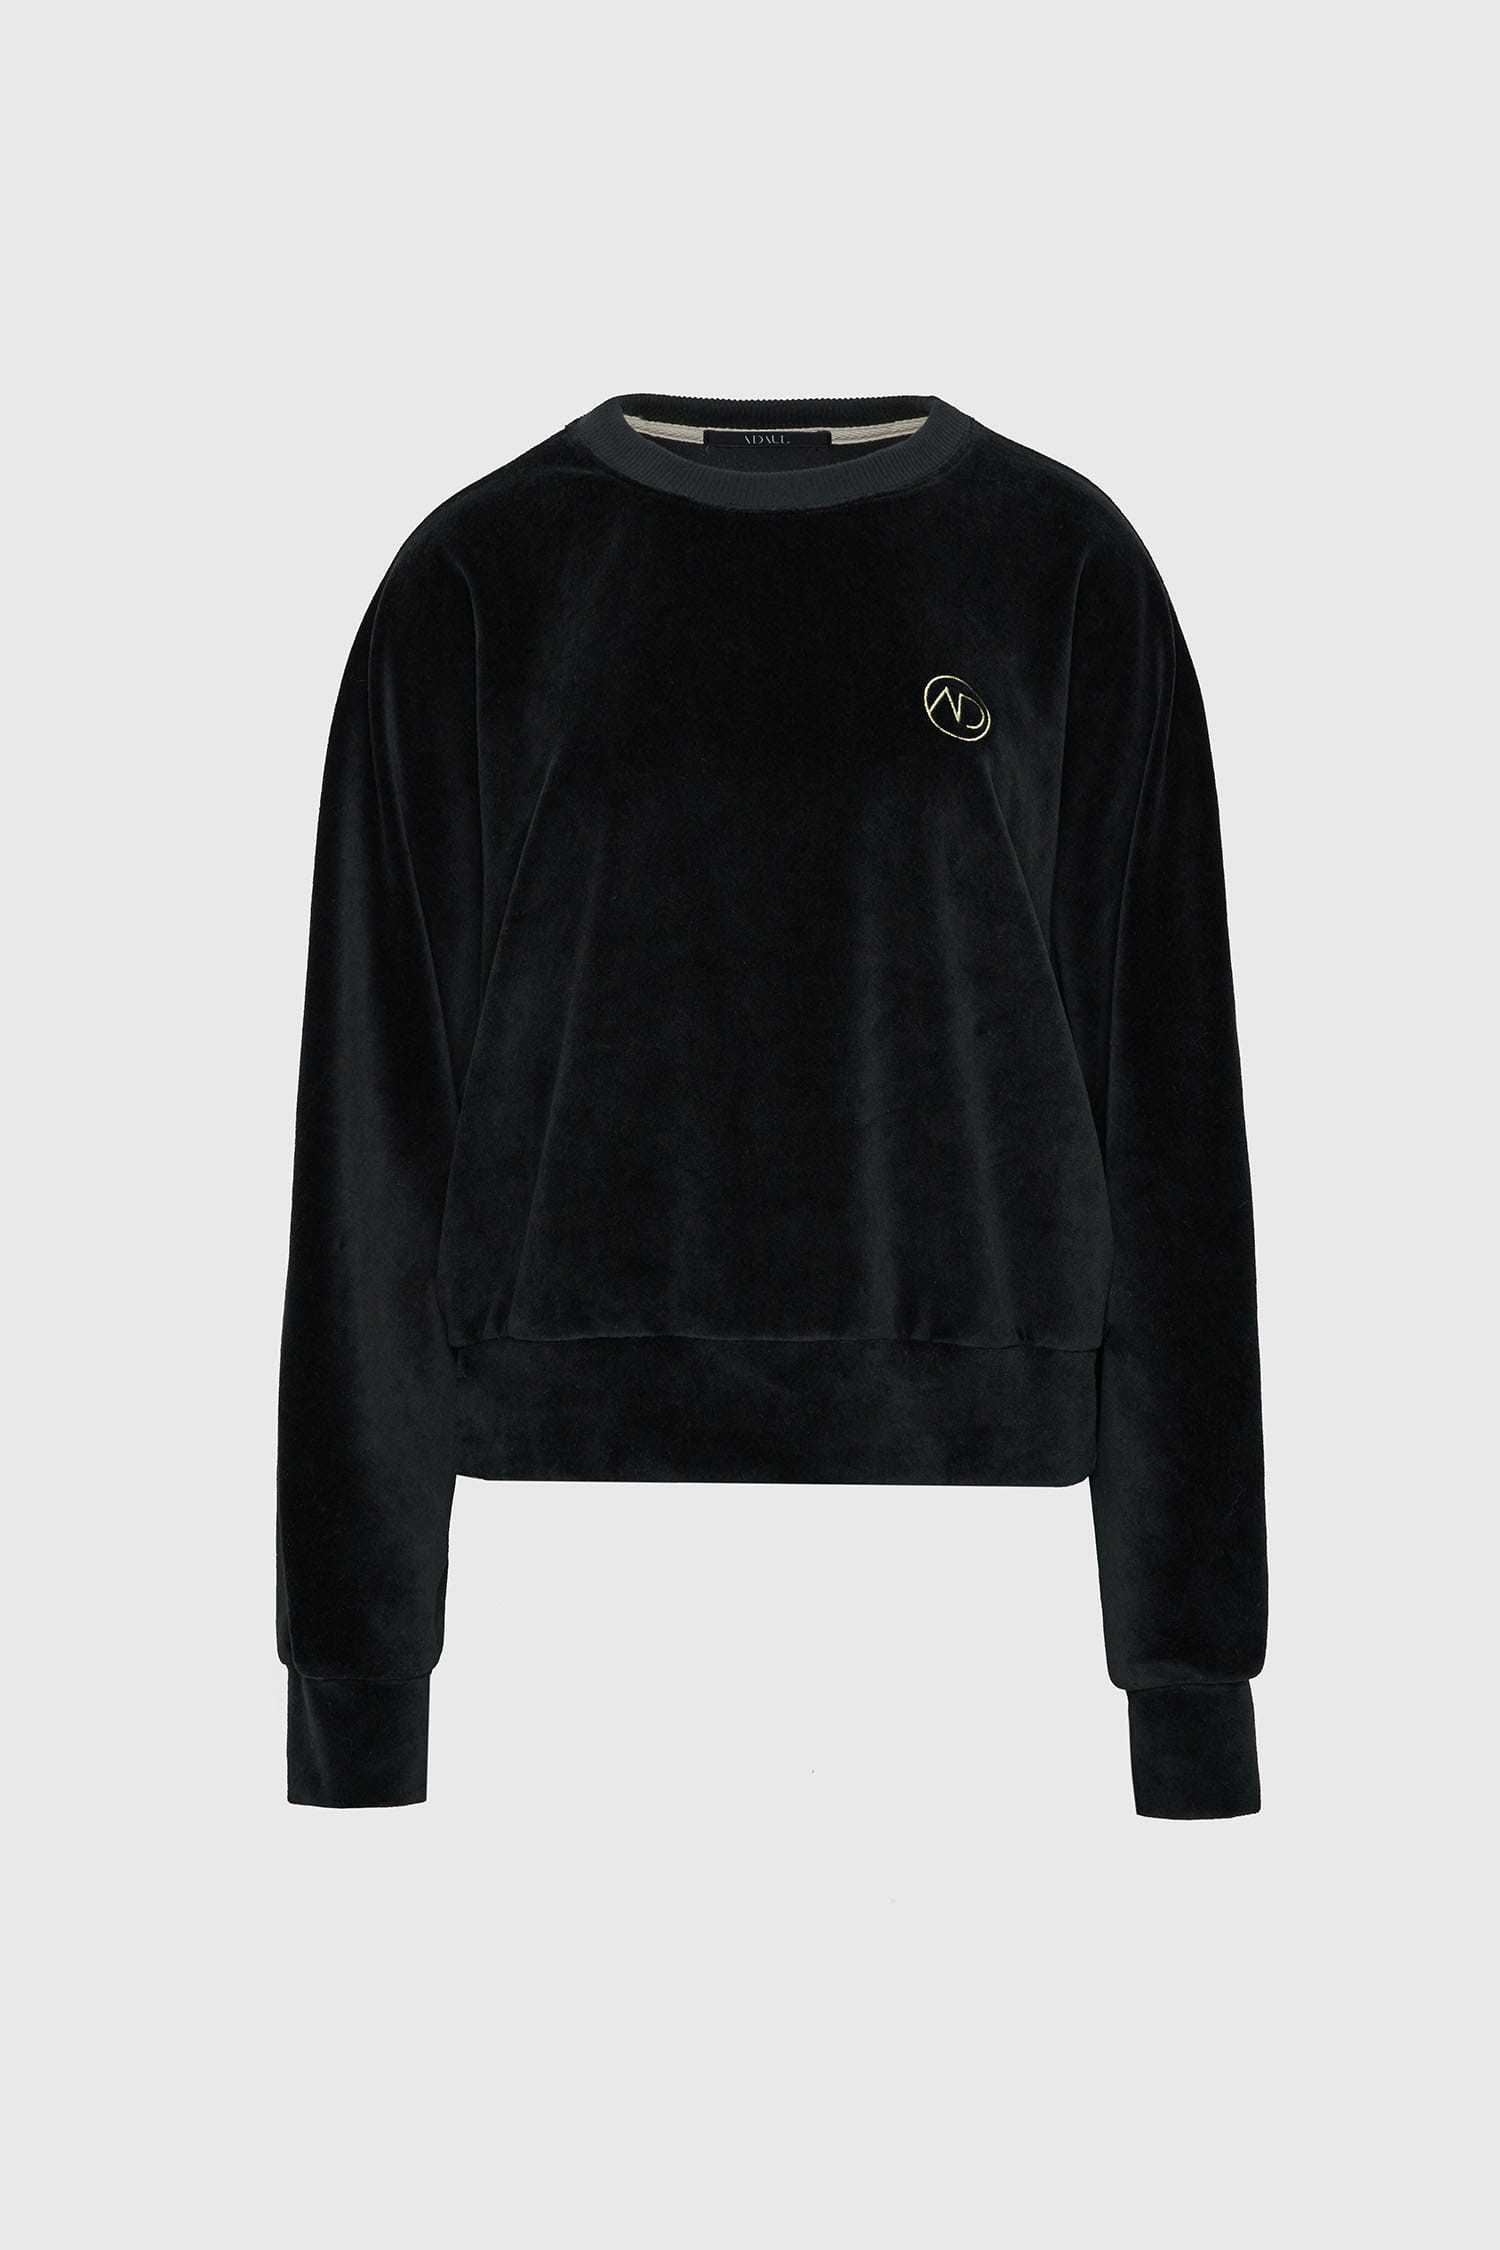 AD logo sweatshirts - black